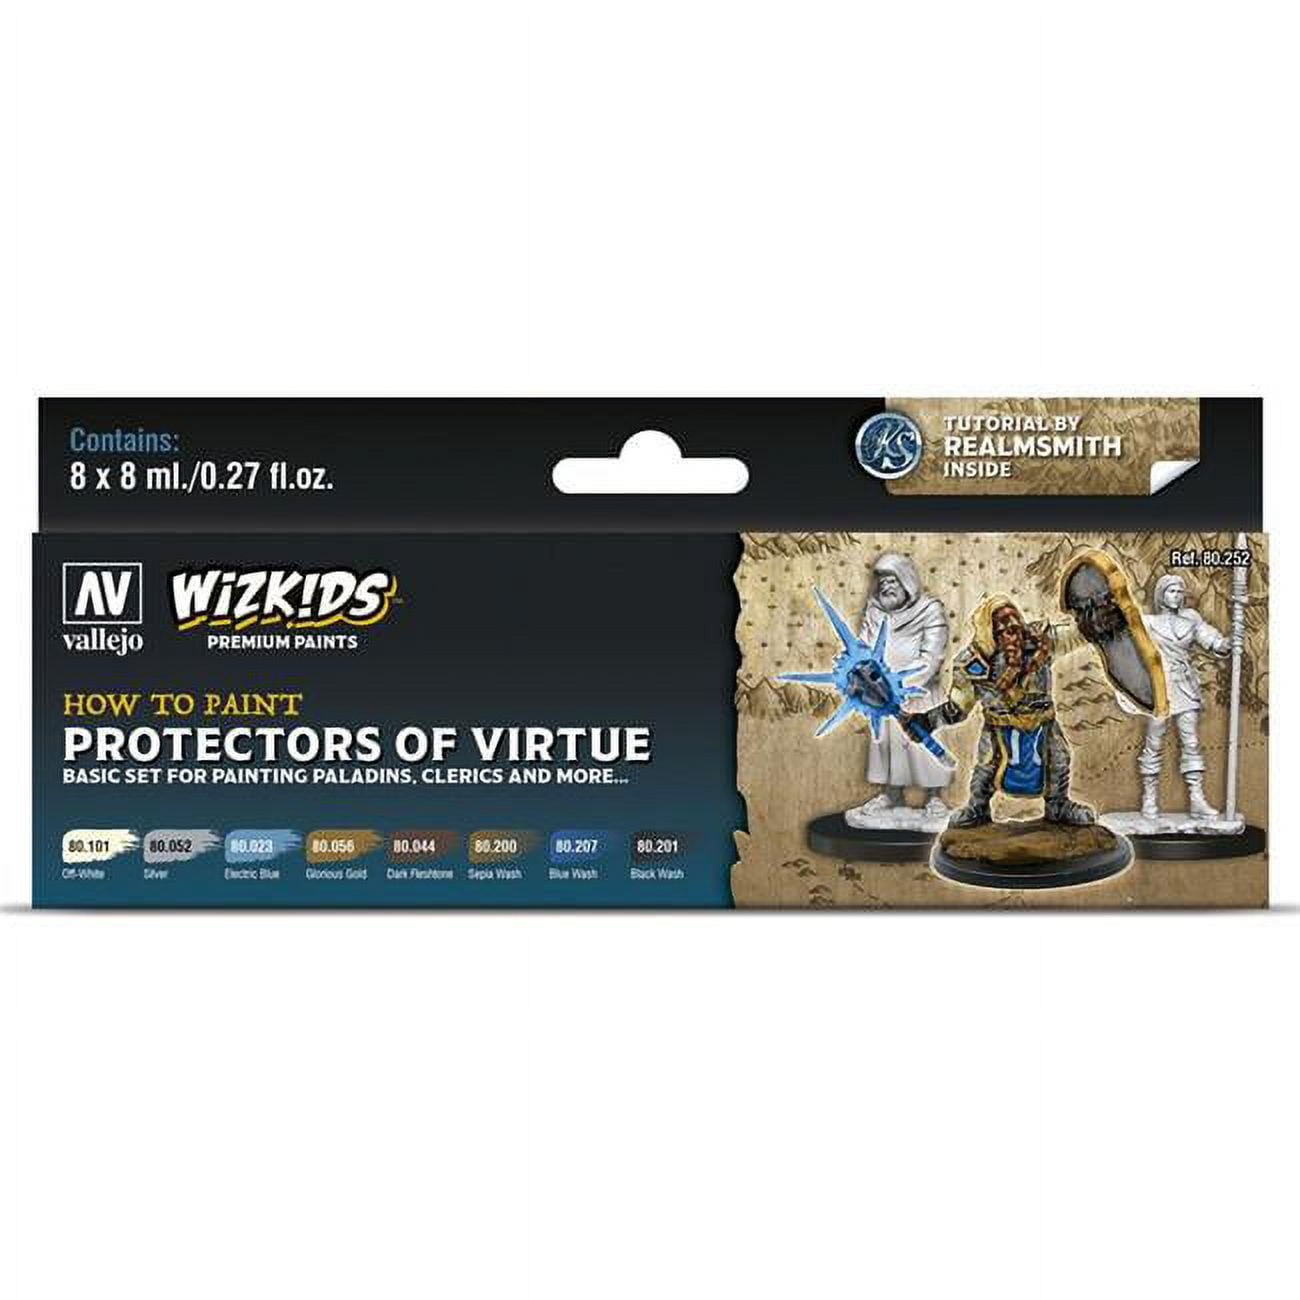 Picture of Acrylicos Vallejo VJP80252 WizKids Premium - Protectors of Virtue Paint Set